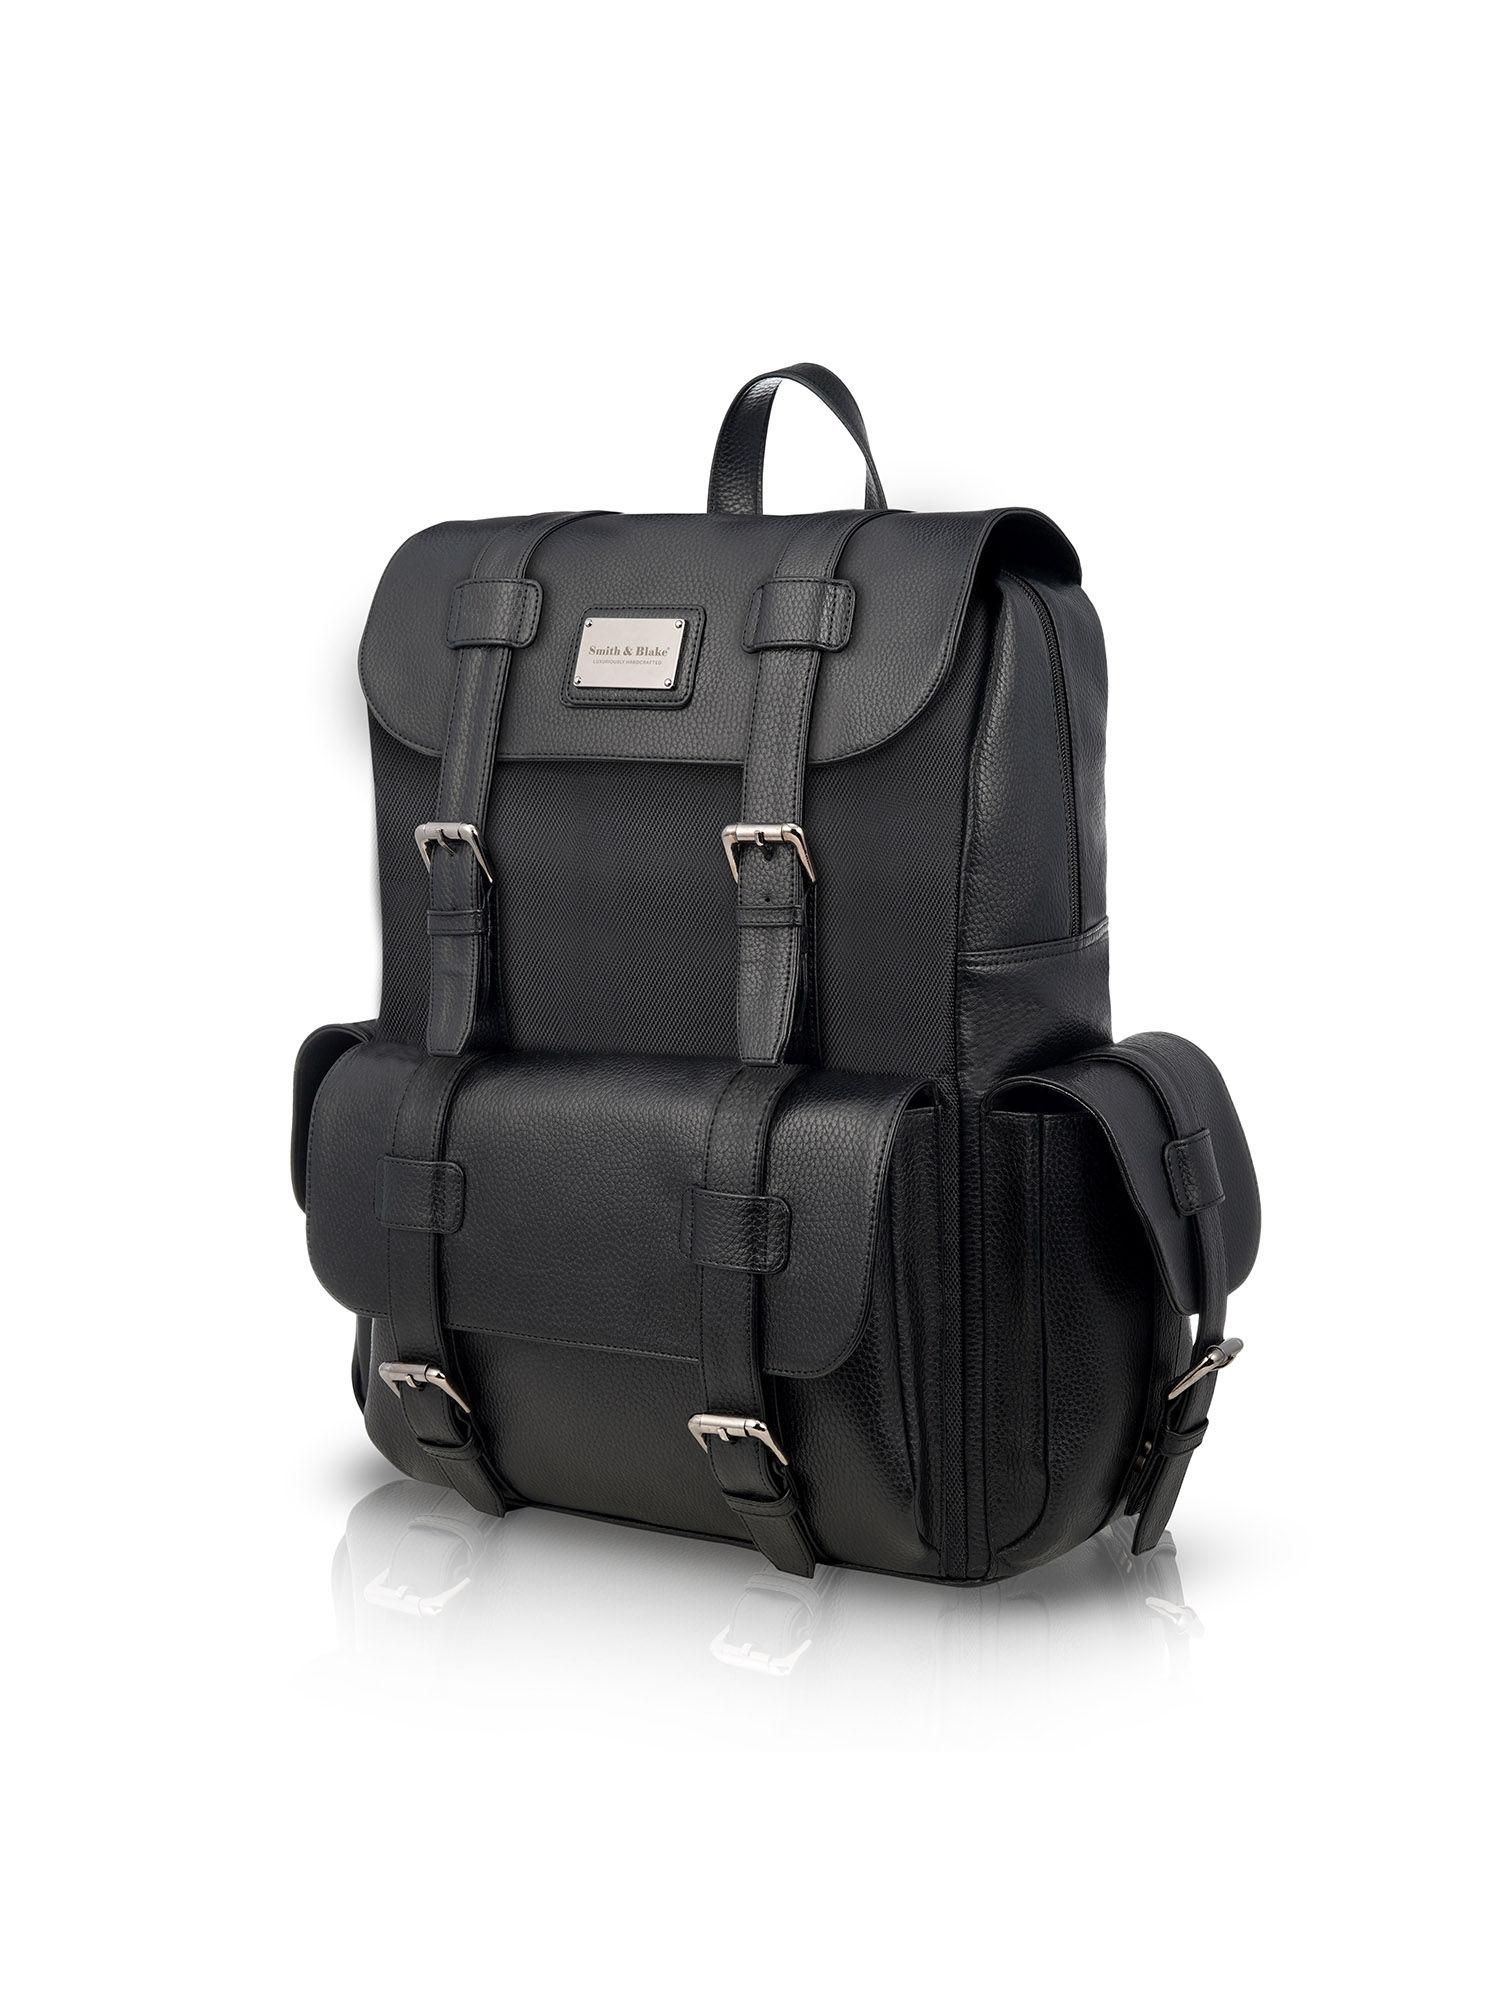 leatherette backpack black toretto